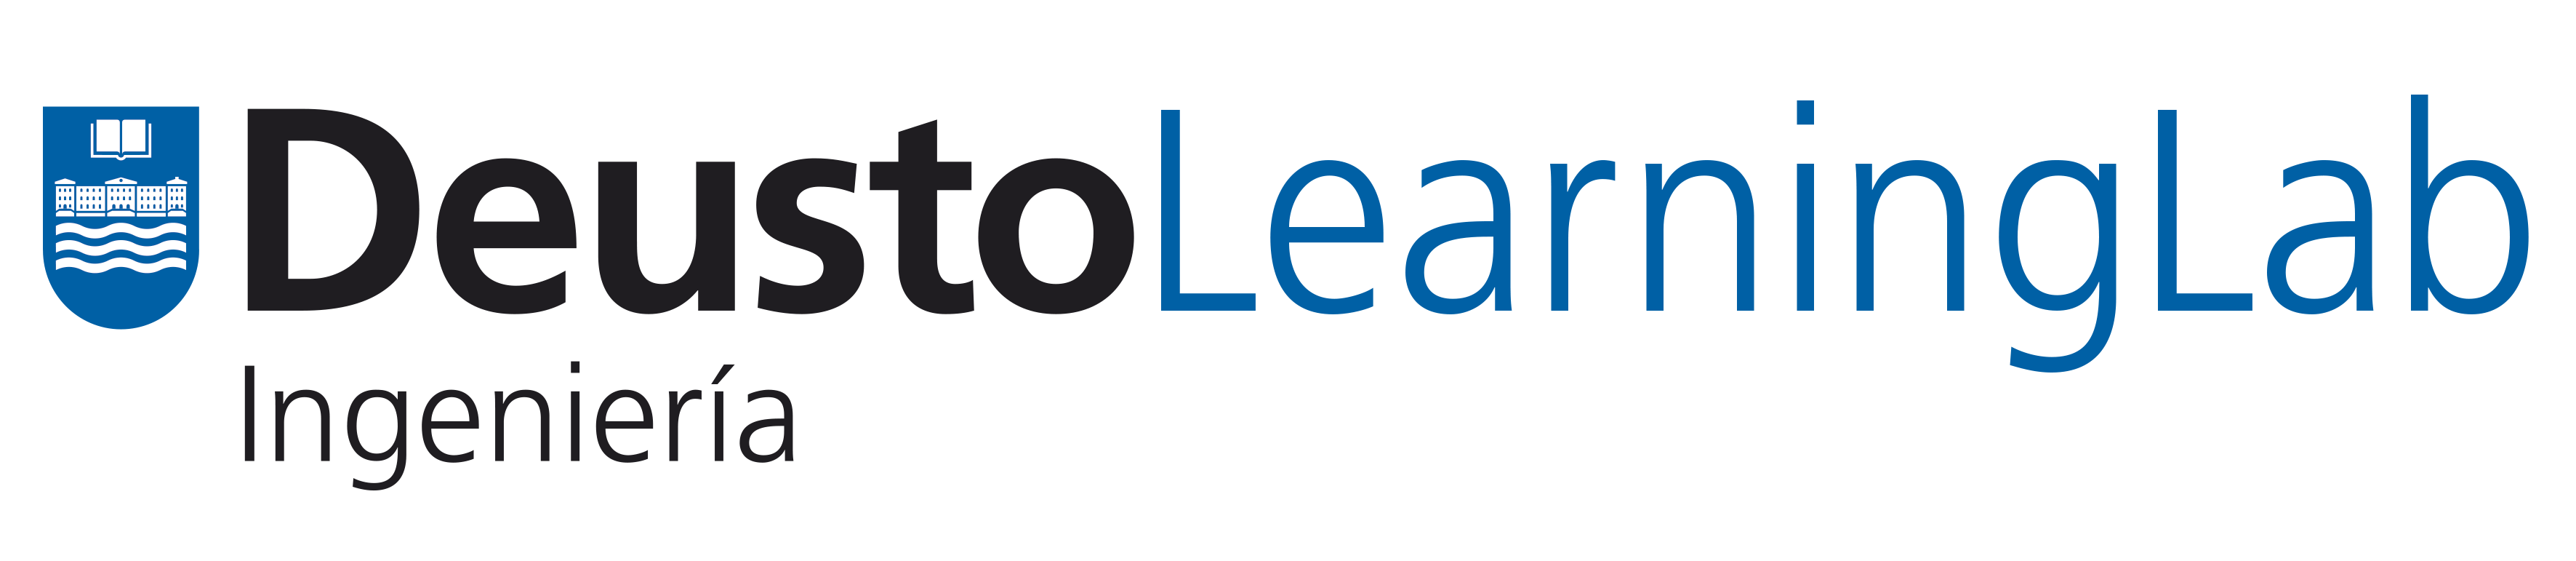 LearningLab logo